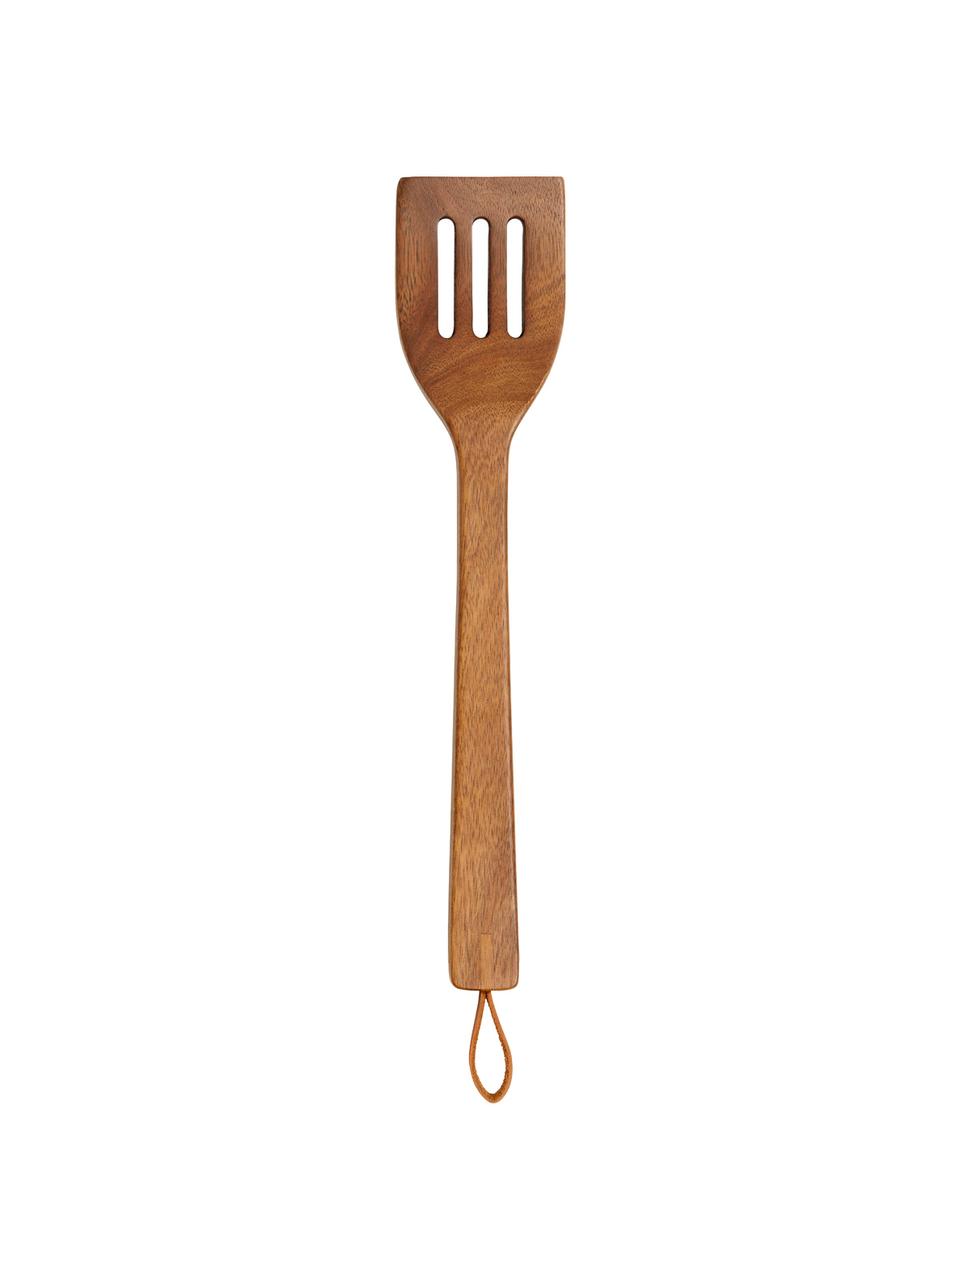 Set de utensilios de cocina Woody, 3 pzas., Acacia, L 35 cm